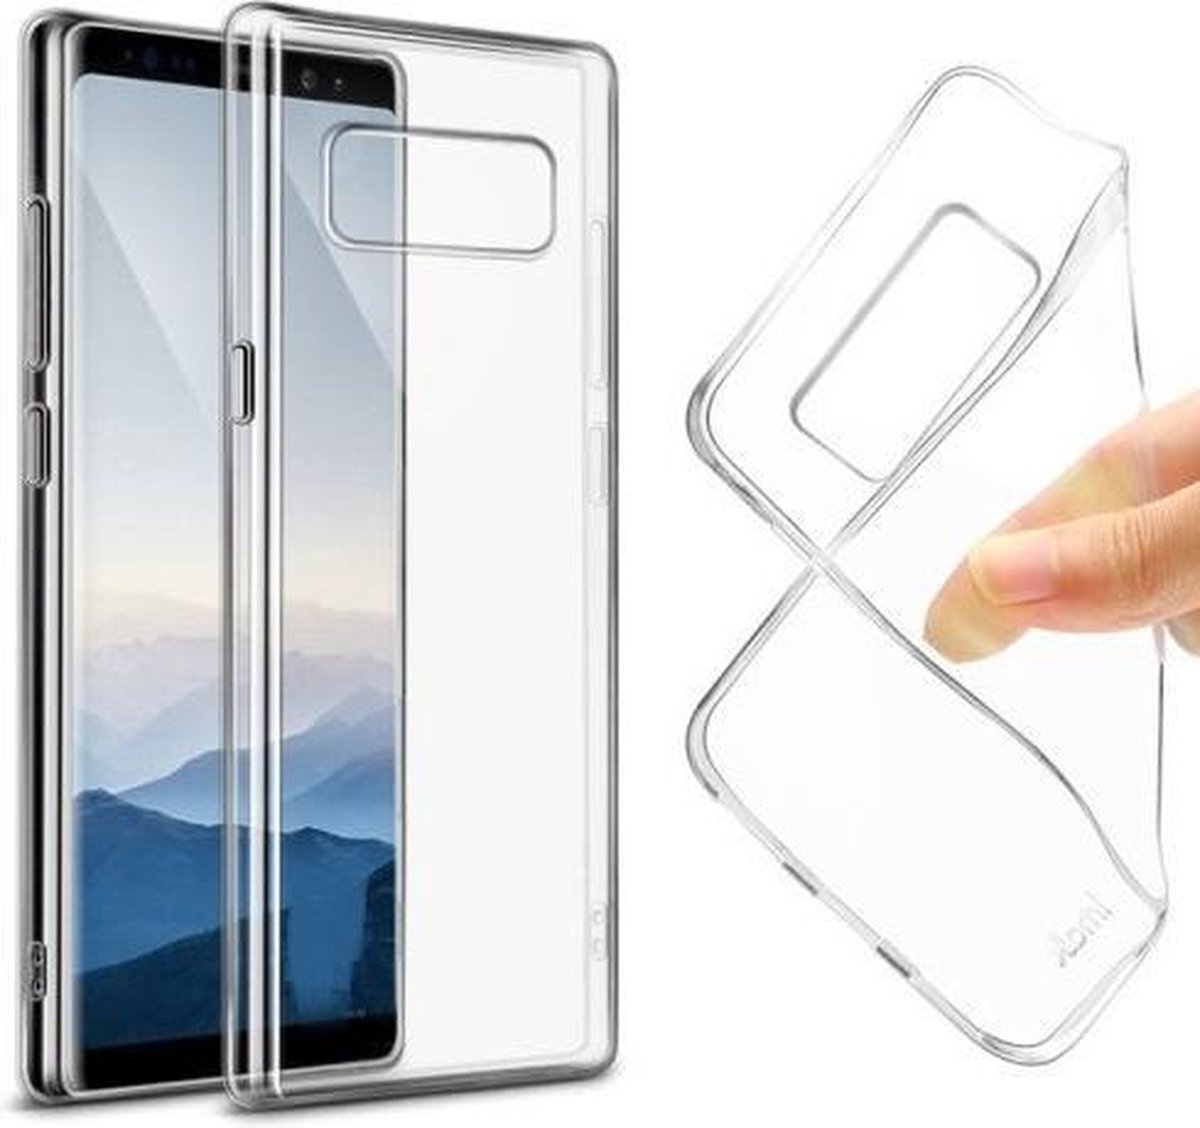 Samsung Galaxy Note 8 siliconen hoesje transparant - zachte hoesje - soft case